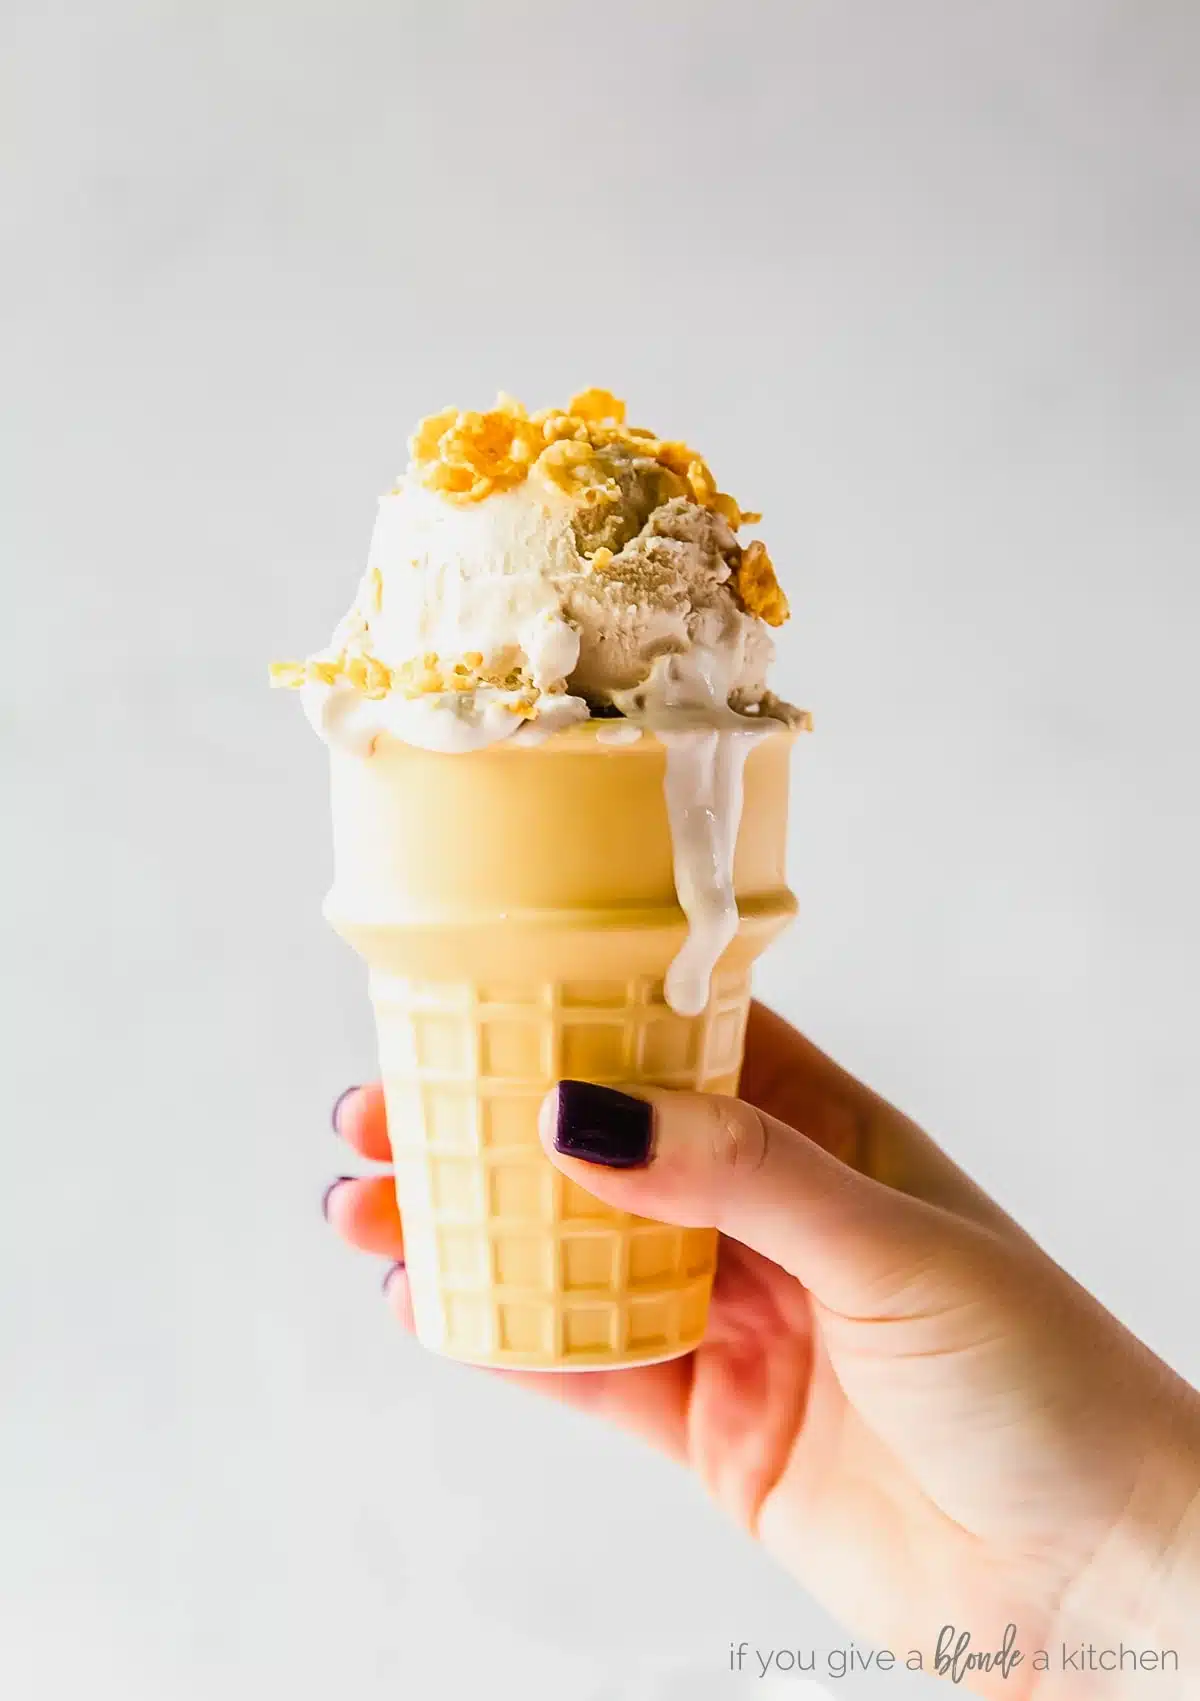 Hand holding cake cone with cereal milk ice cream.